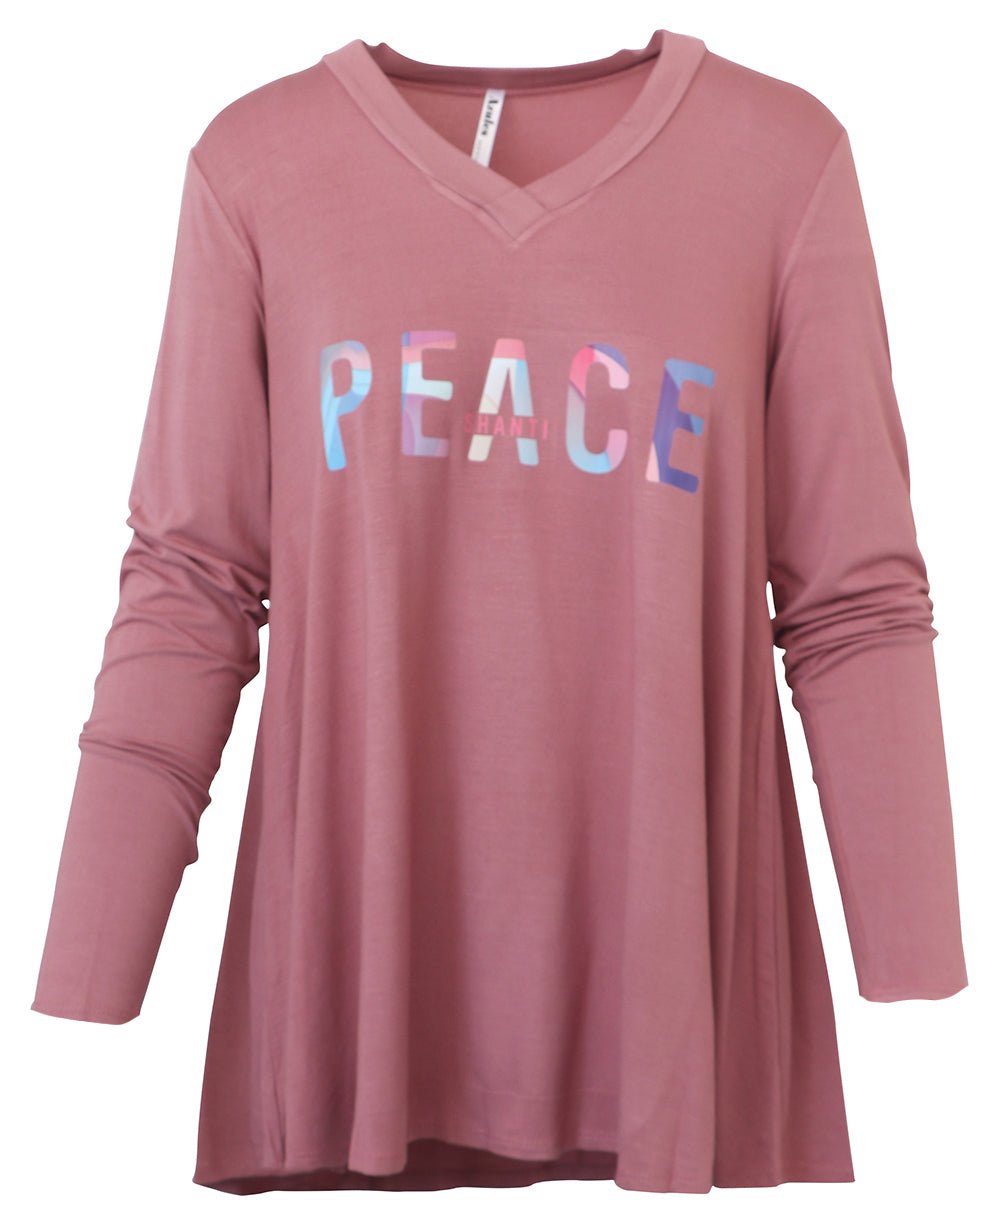 Rose Tunic Top with Peace, Shanti Inspirational Design - Shirts & Tops S